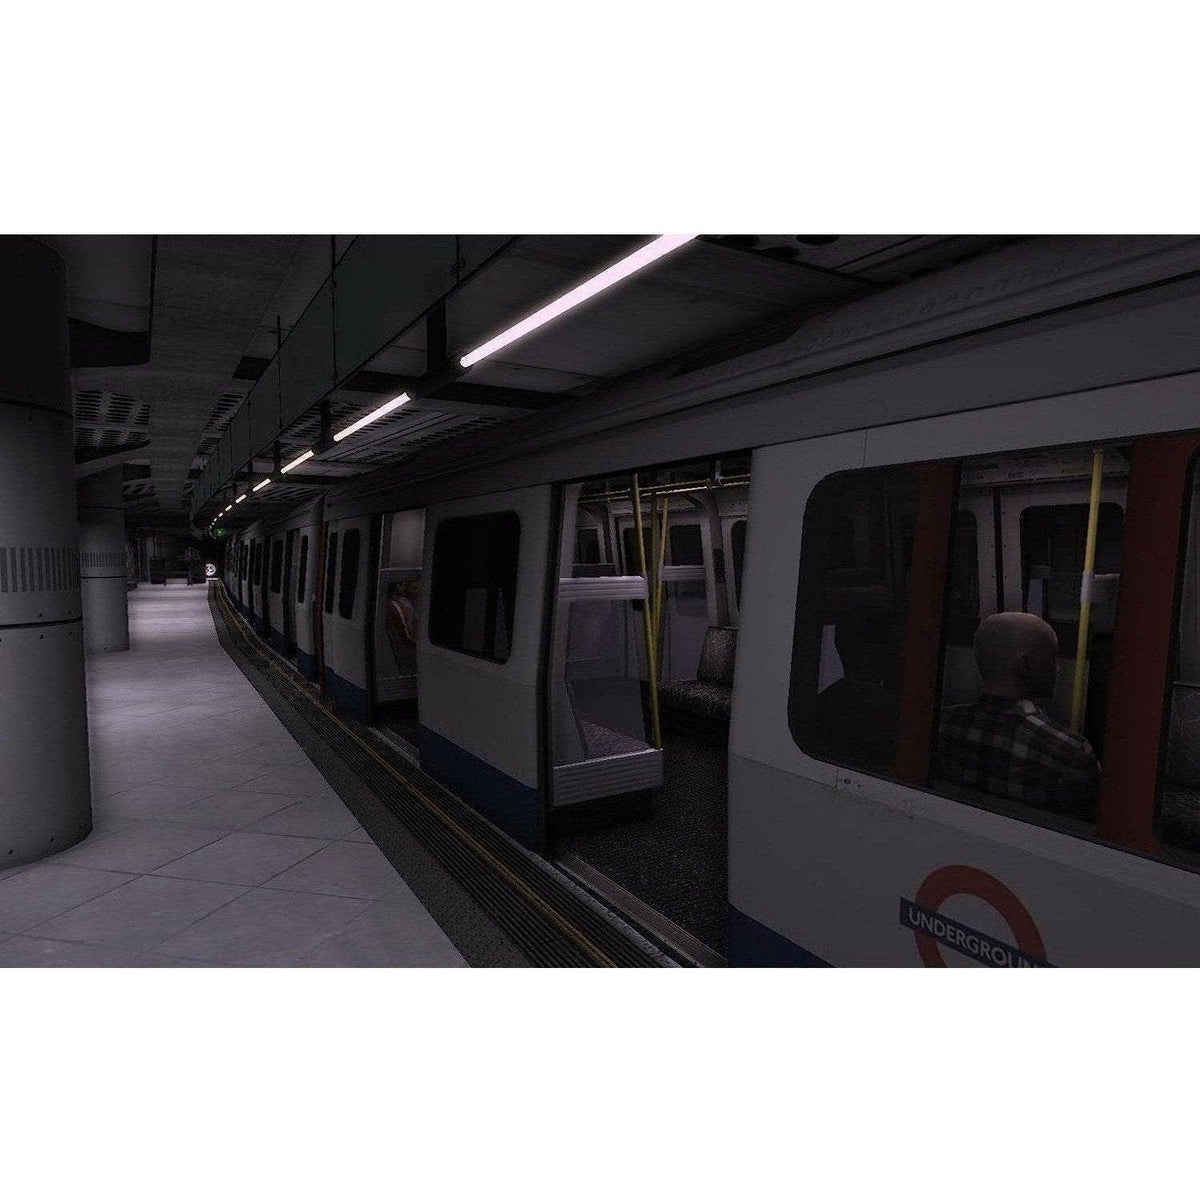 London Underground Simulator - World Of Subways 3 PC